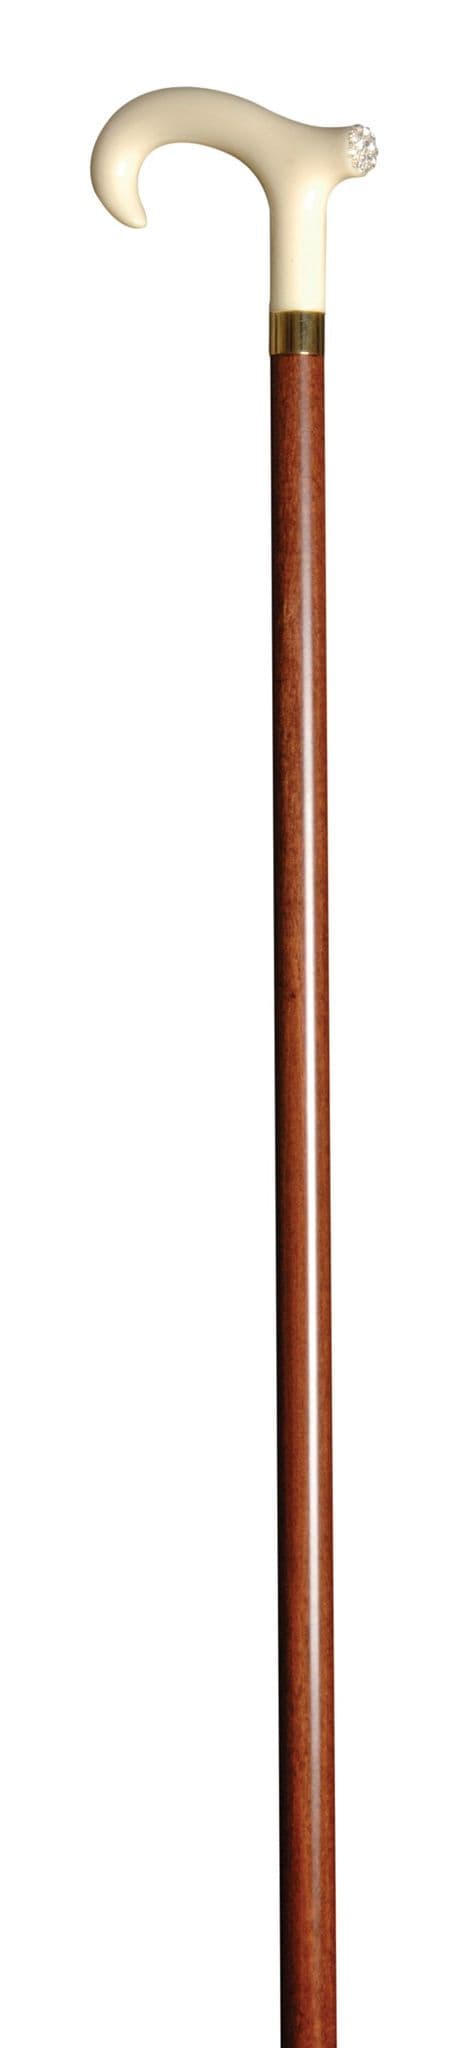 Classic Canes Ladies crutch handle cane, imitation ivory, Swarovski Elements